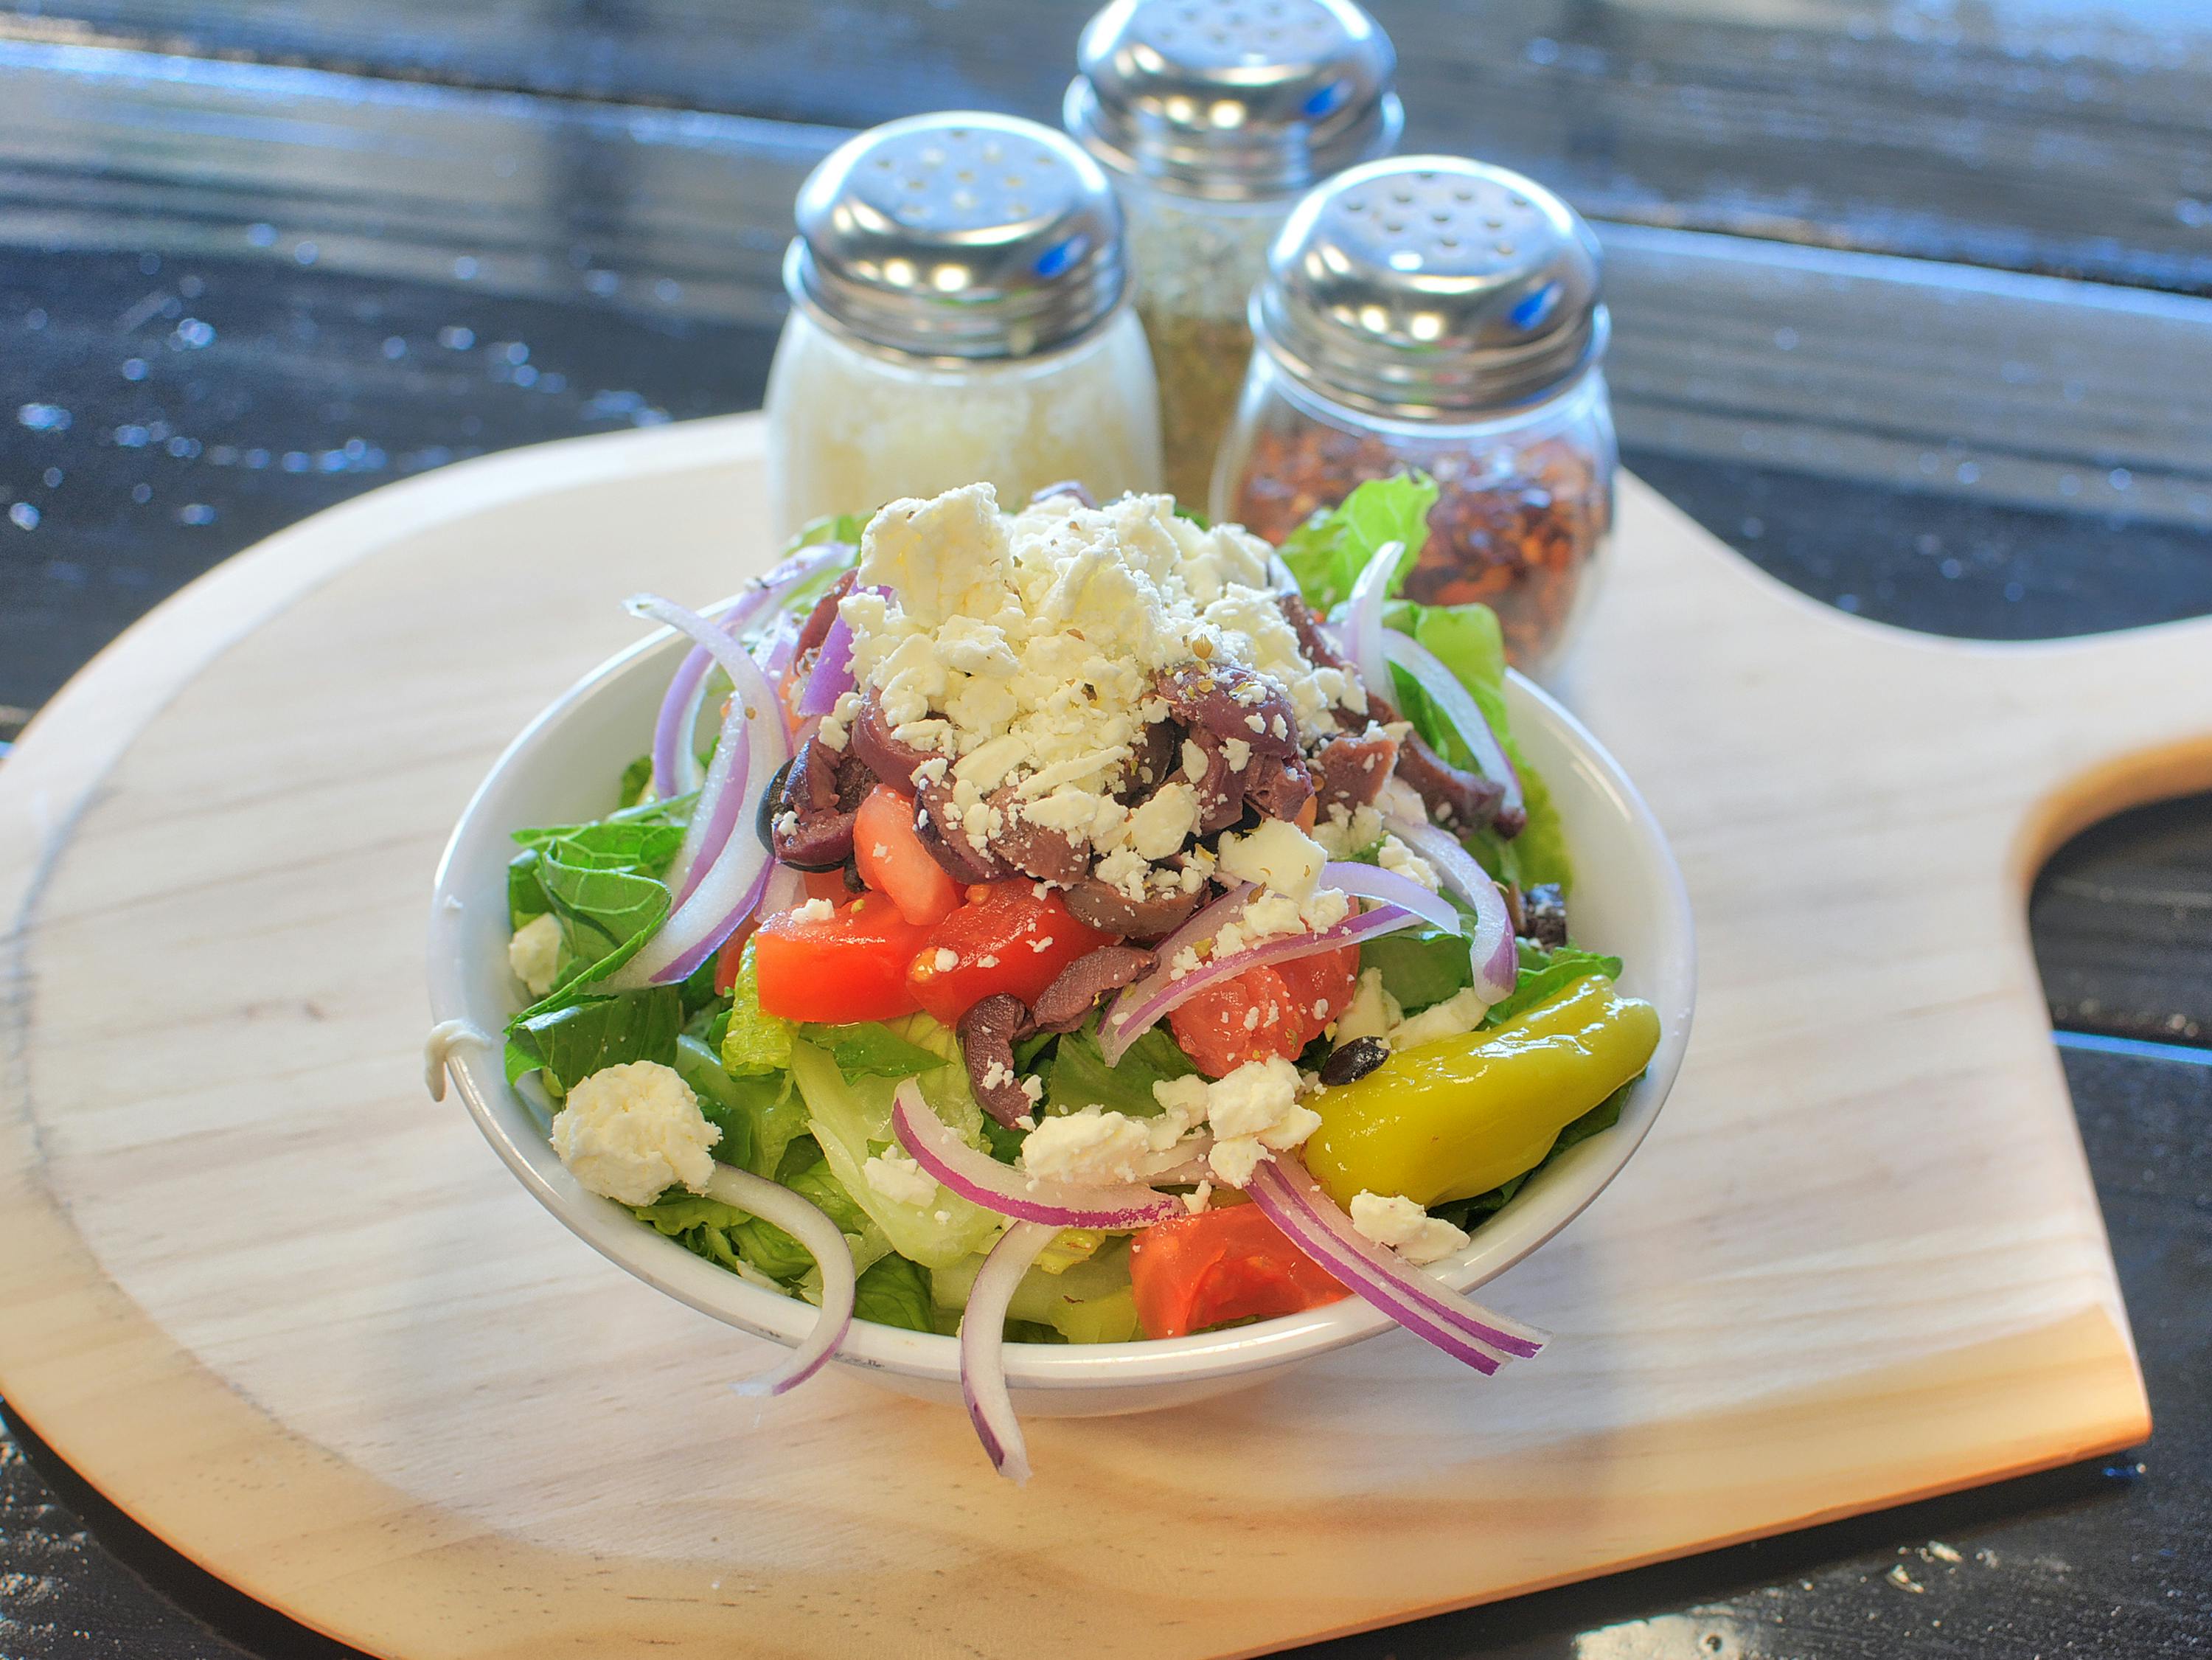 3. Greek Salad from Pacific Pizza - Pomerado Rd in Poway, CA